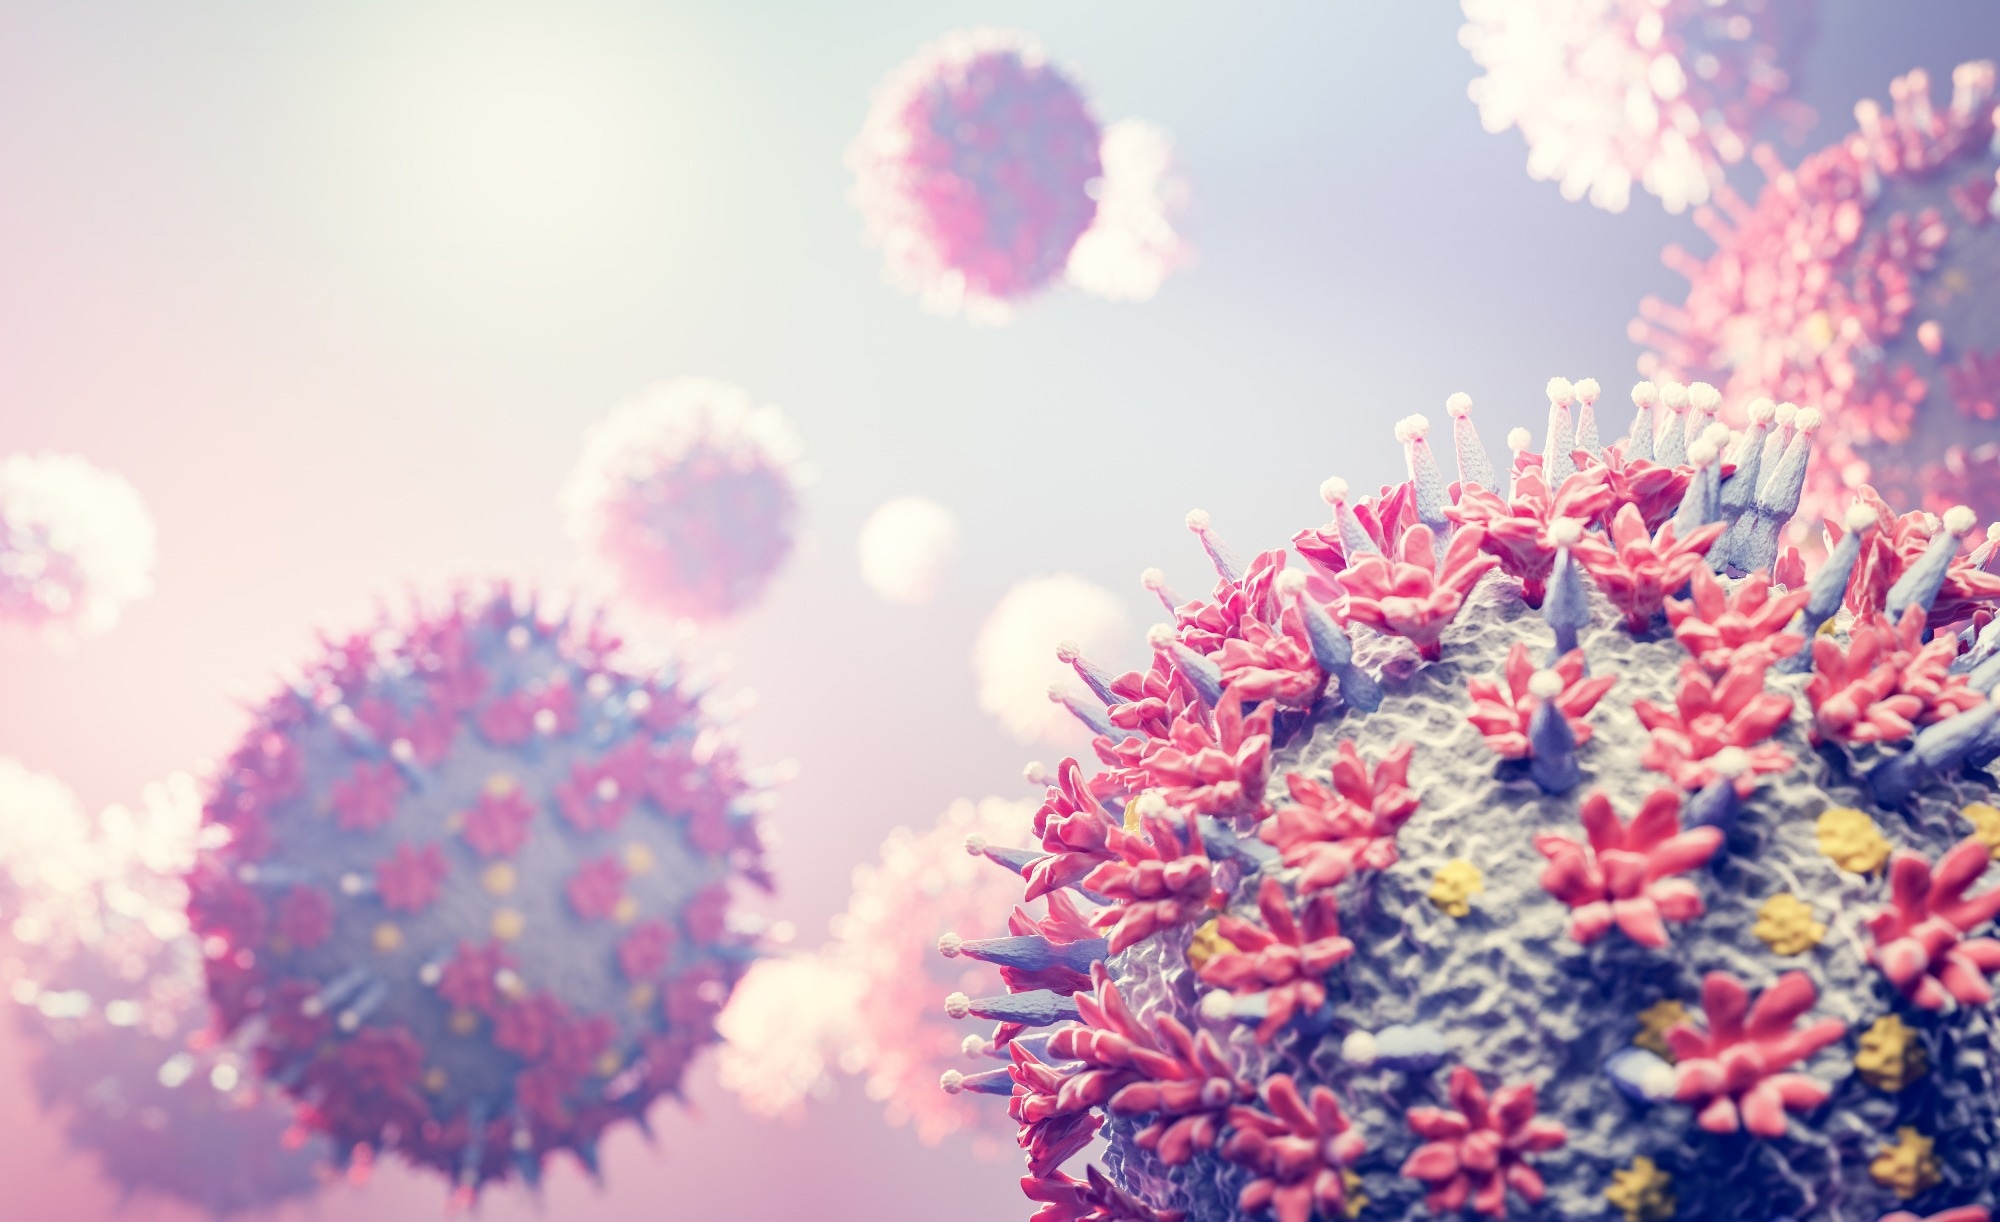 Study: Residual Sanitization of Three Human Respiratory Viruses on a Hard, Non-Porous Surface. Image Credit: PHOTOCREO Michal Bednarek/Shutterstock